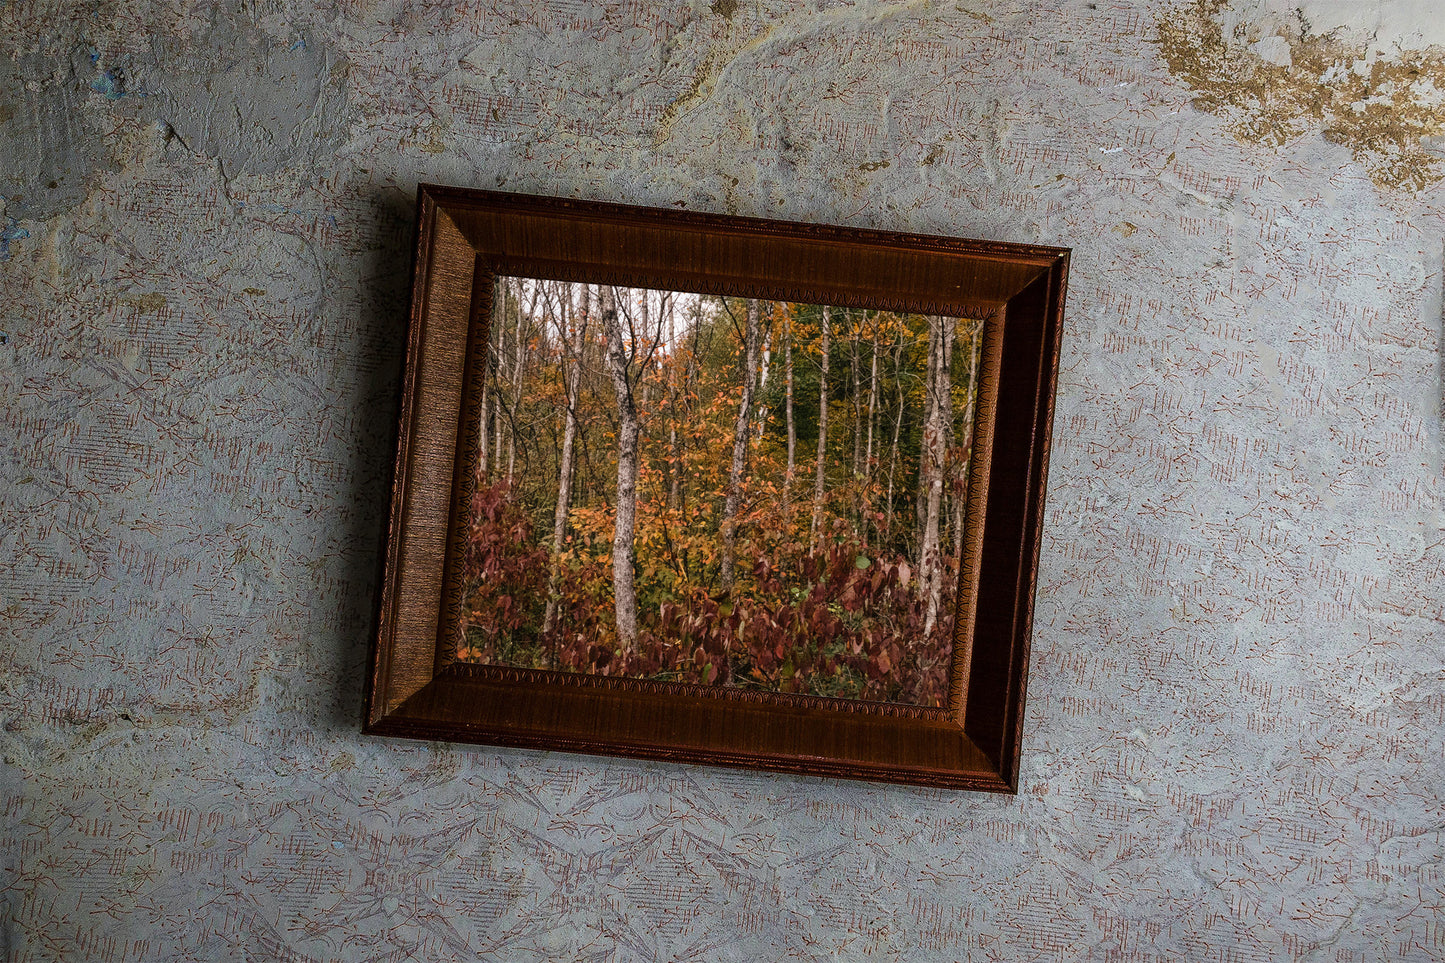 Photographic Print: "Autumn Feelings"